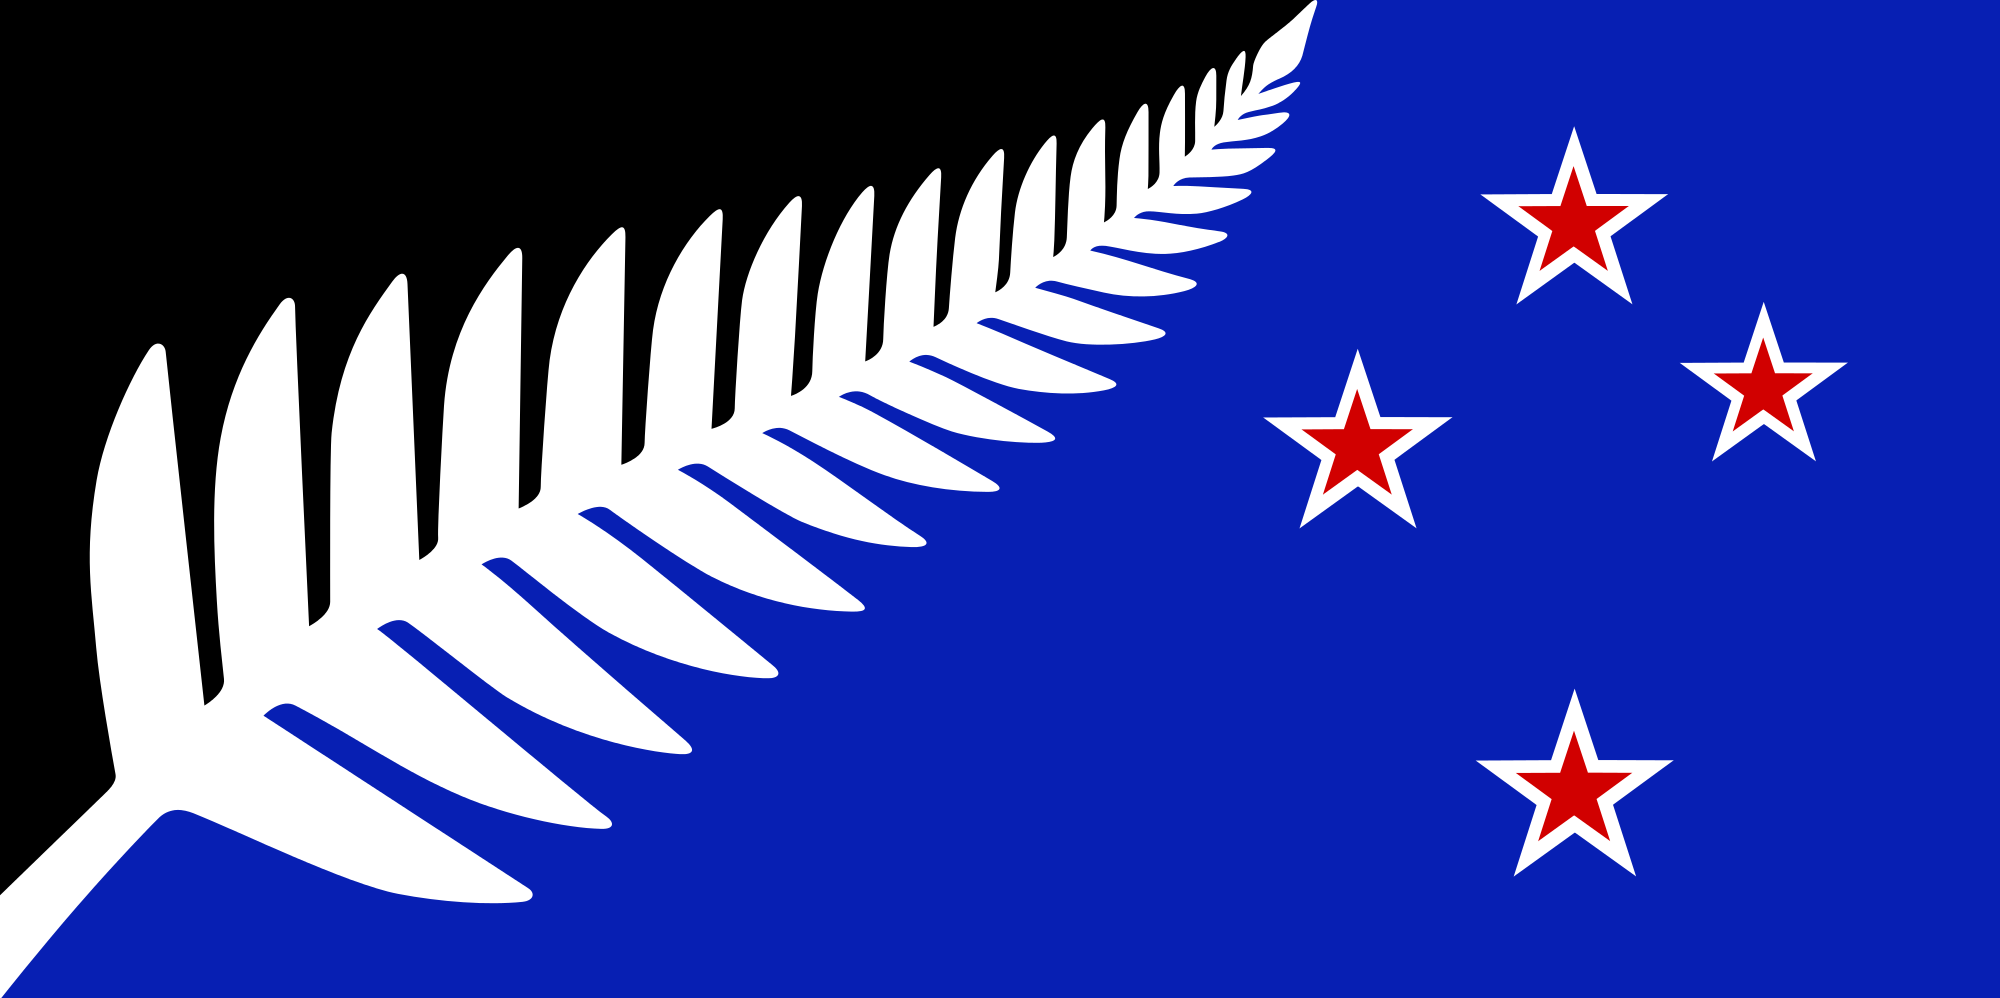 Lockwood silver fern flag - Wikipedia